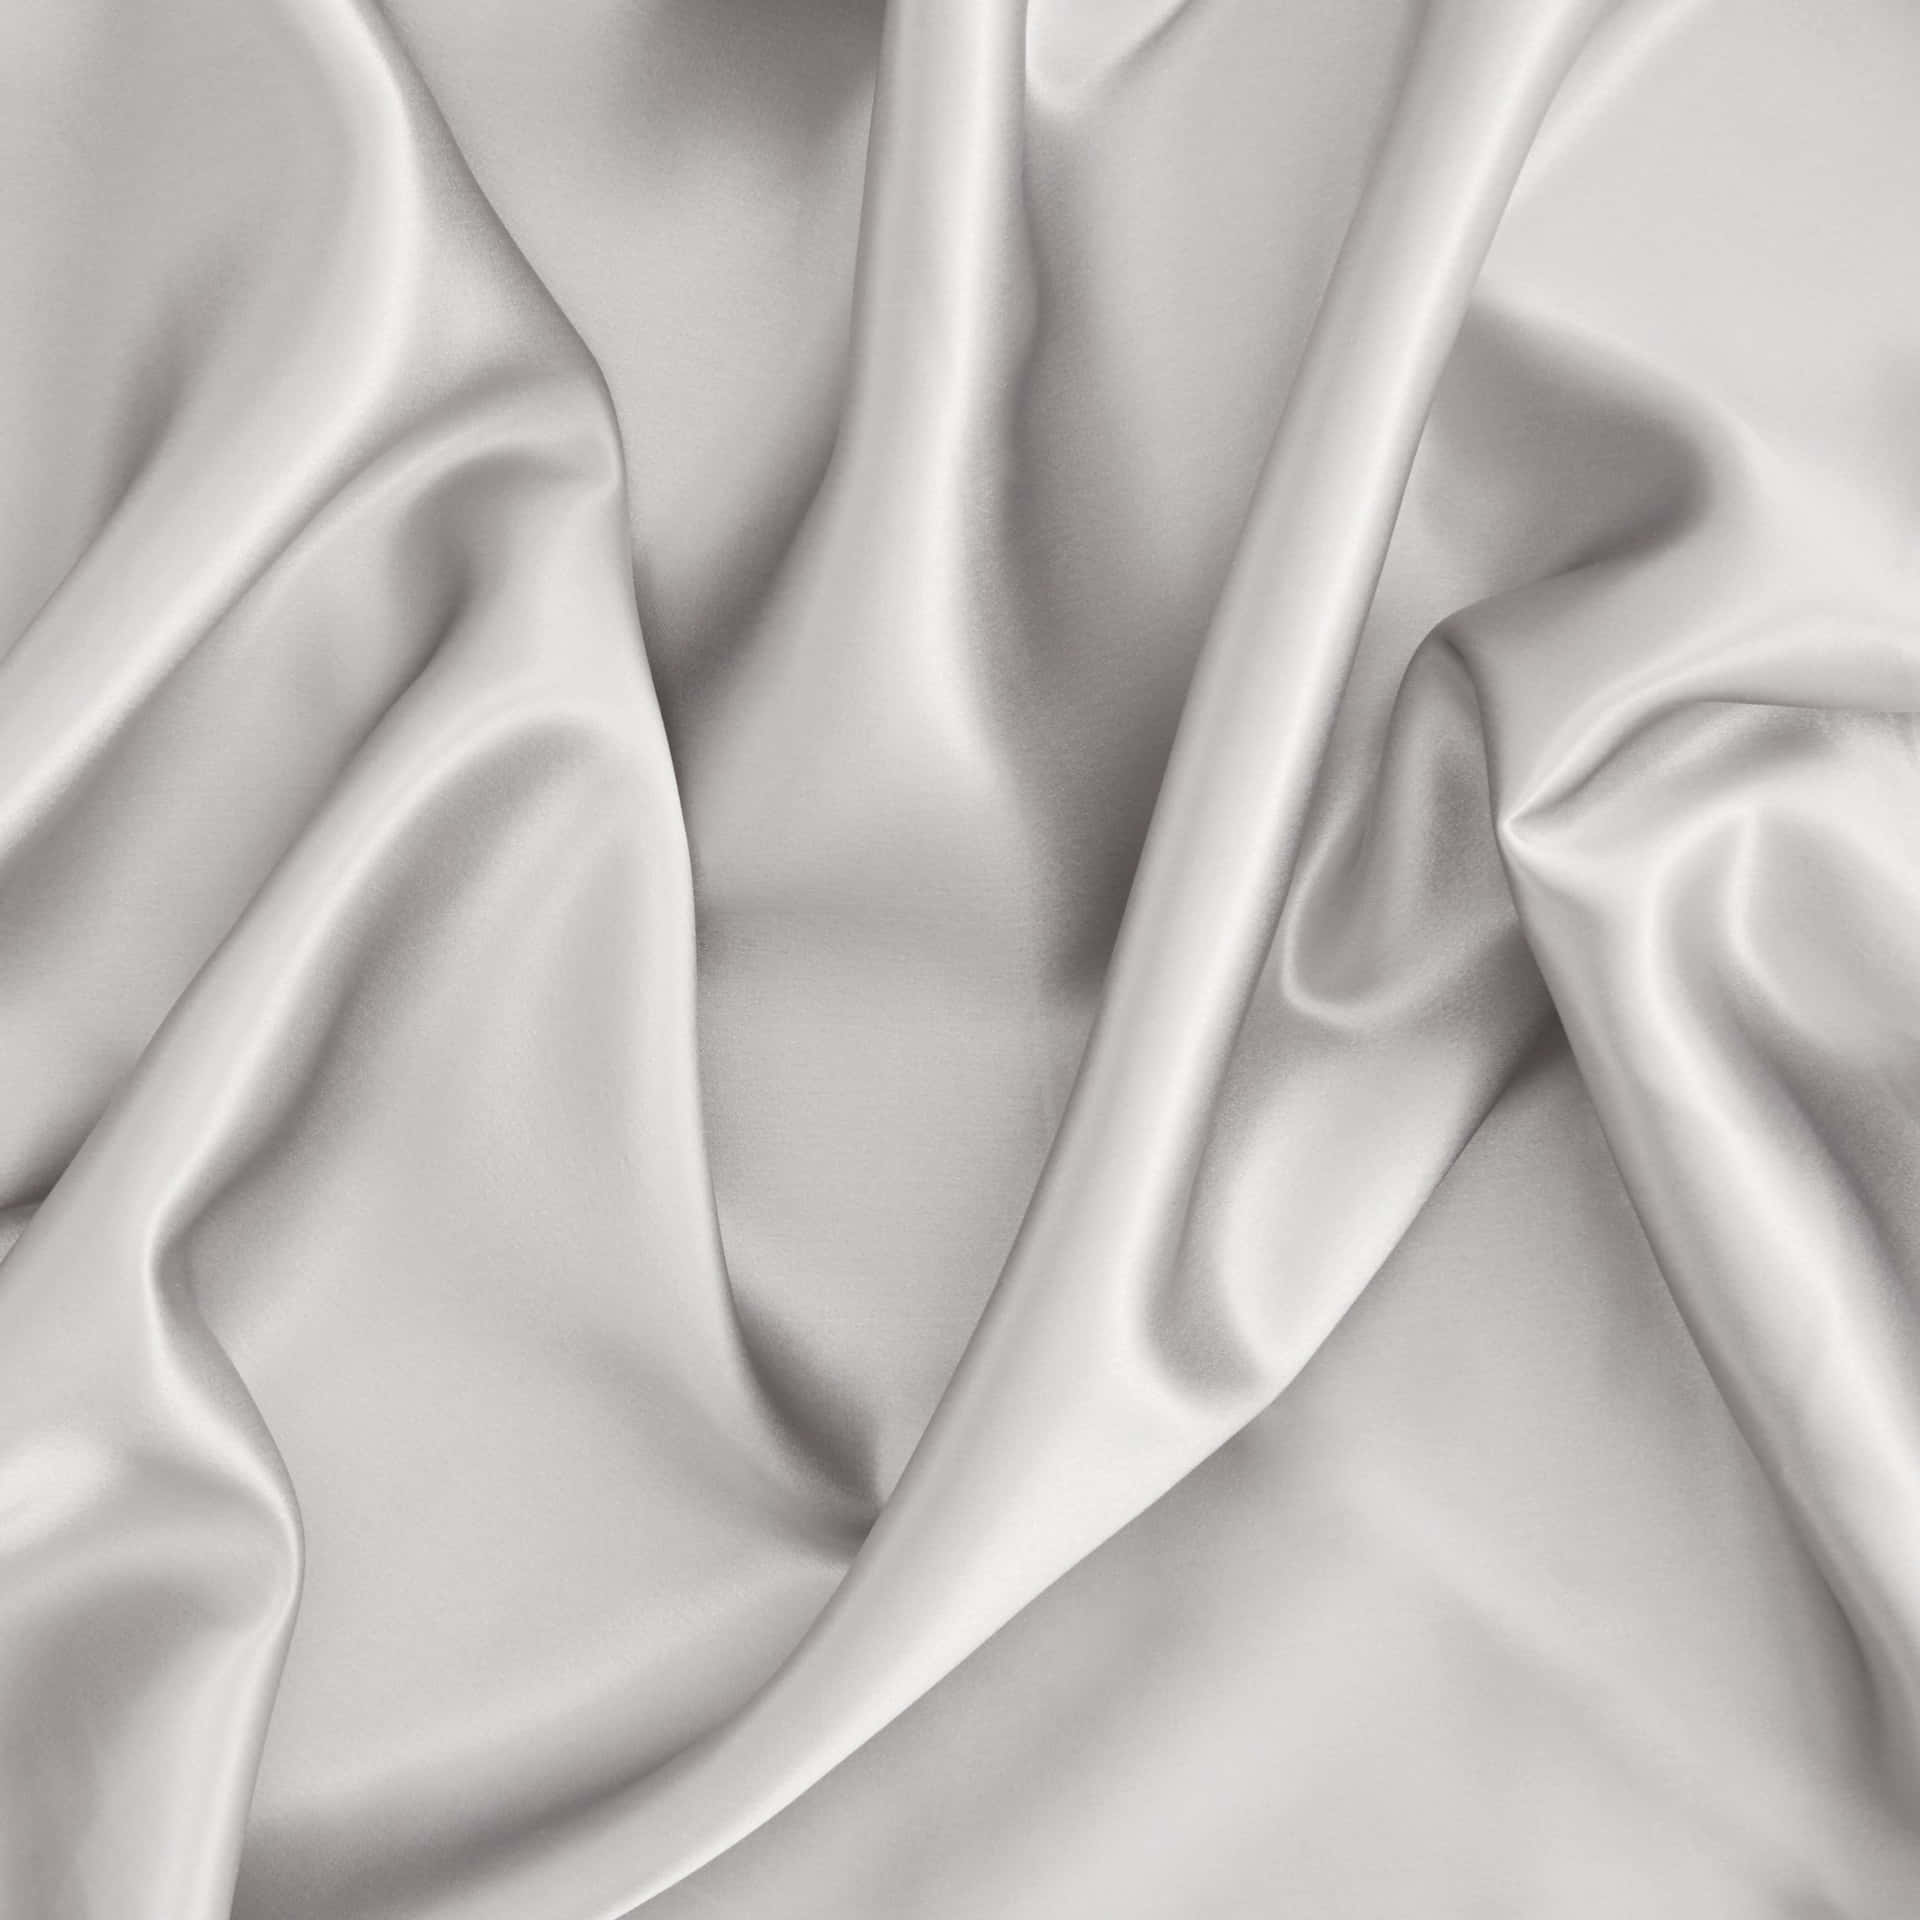 A Close Up Of A White Silk Fabric